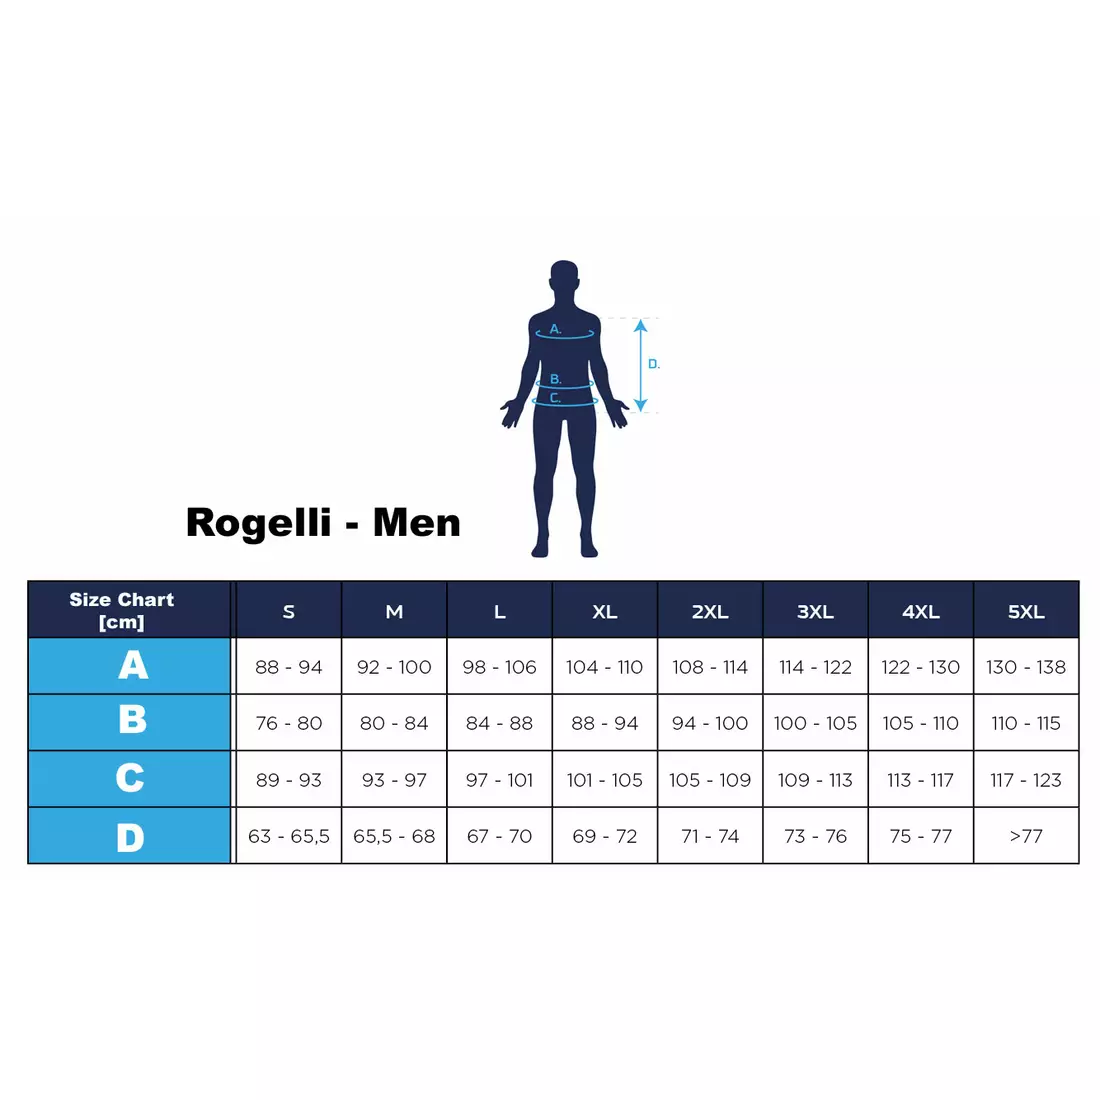 ROGELLI BASE men's cycling jersey, black